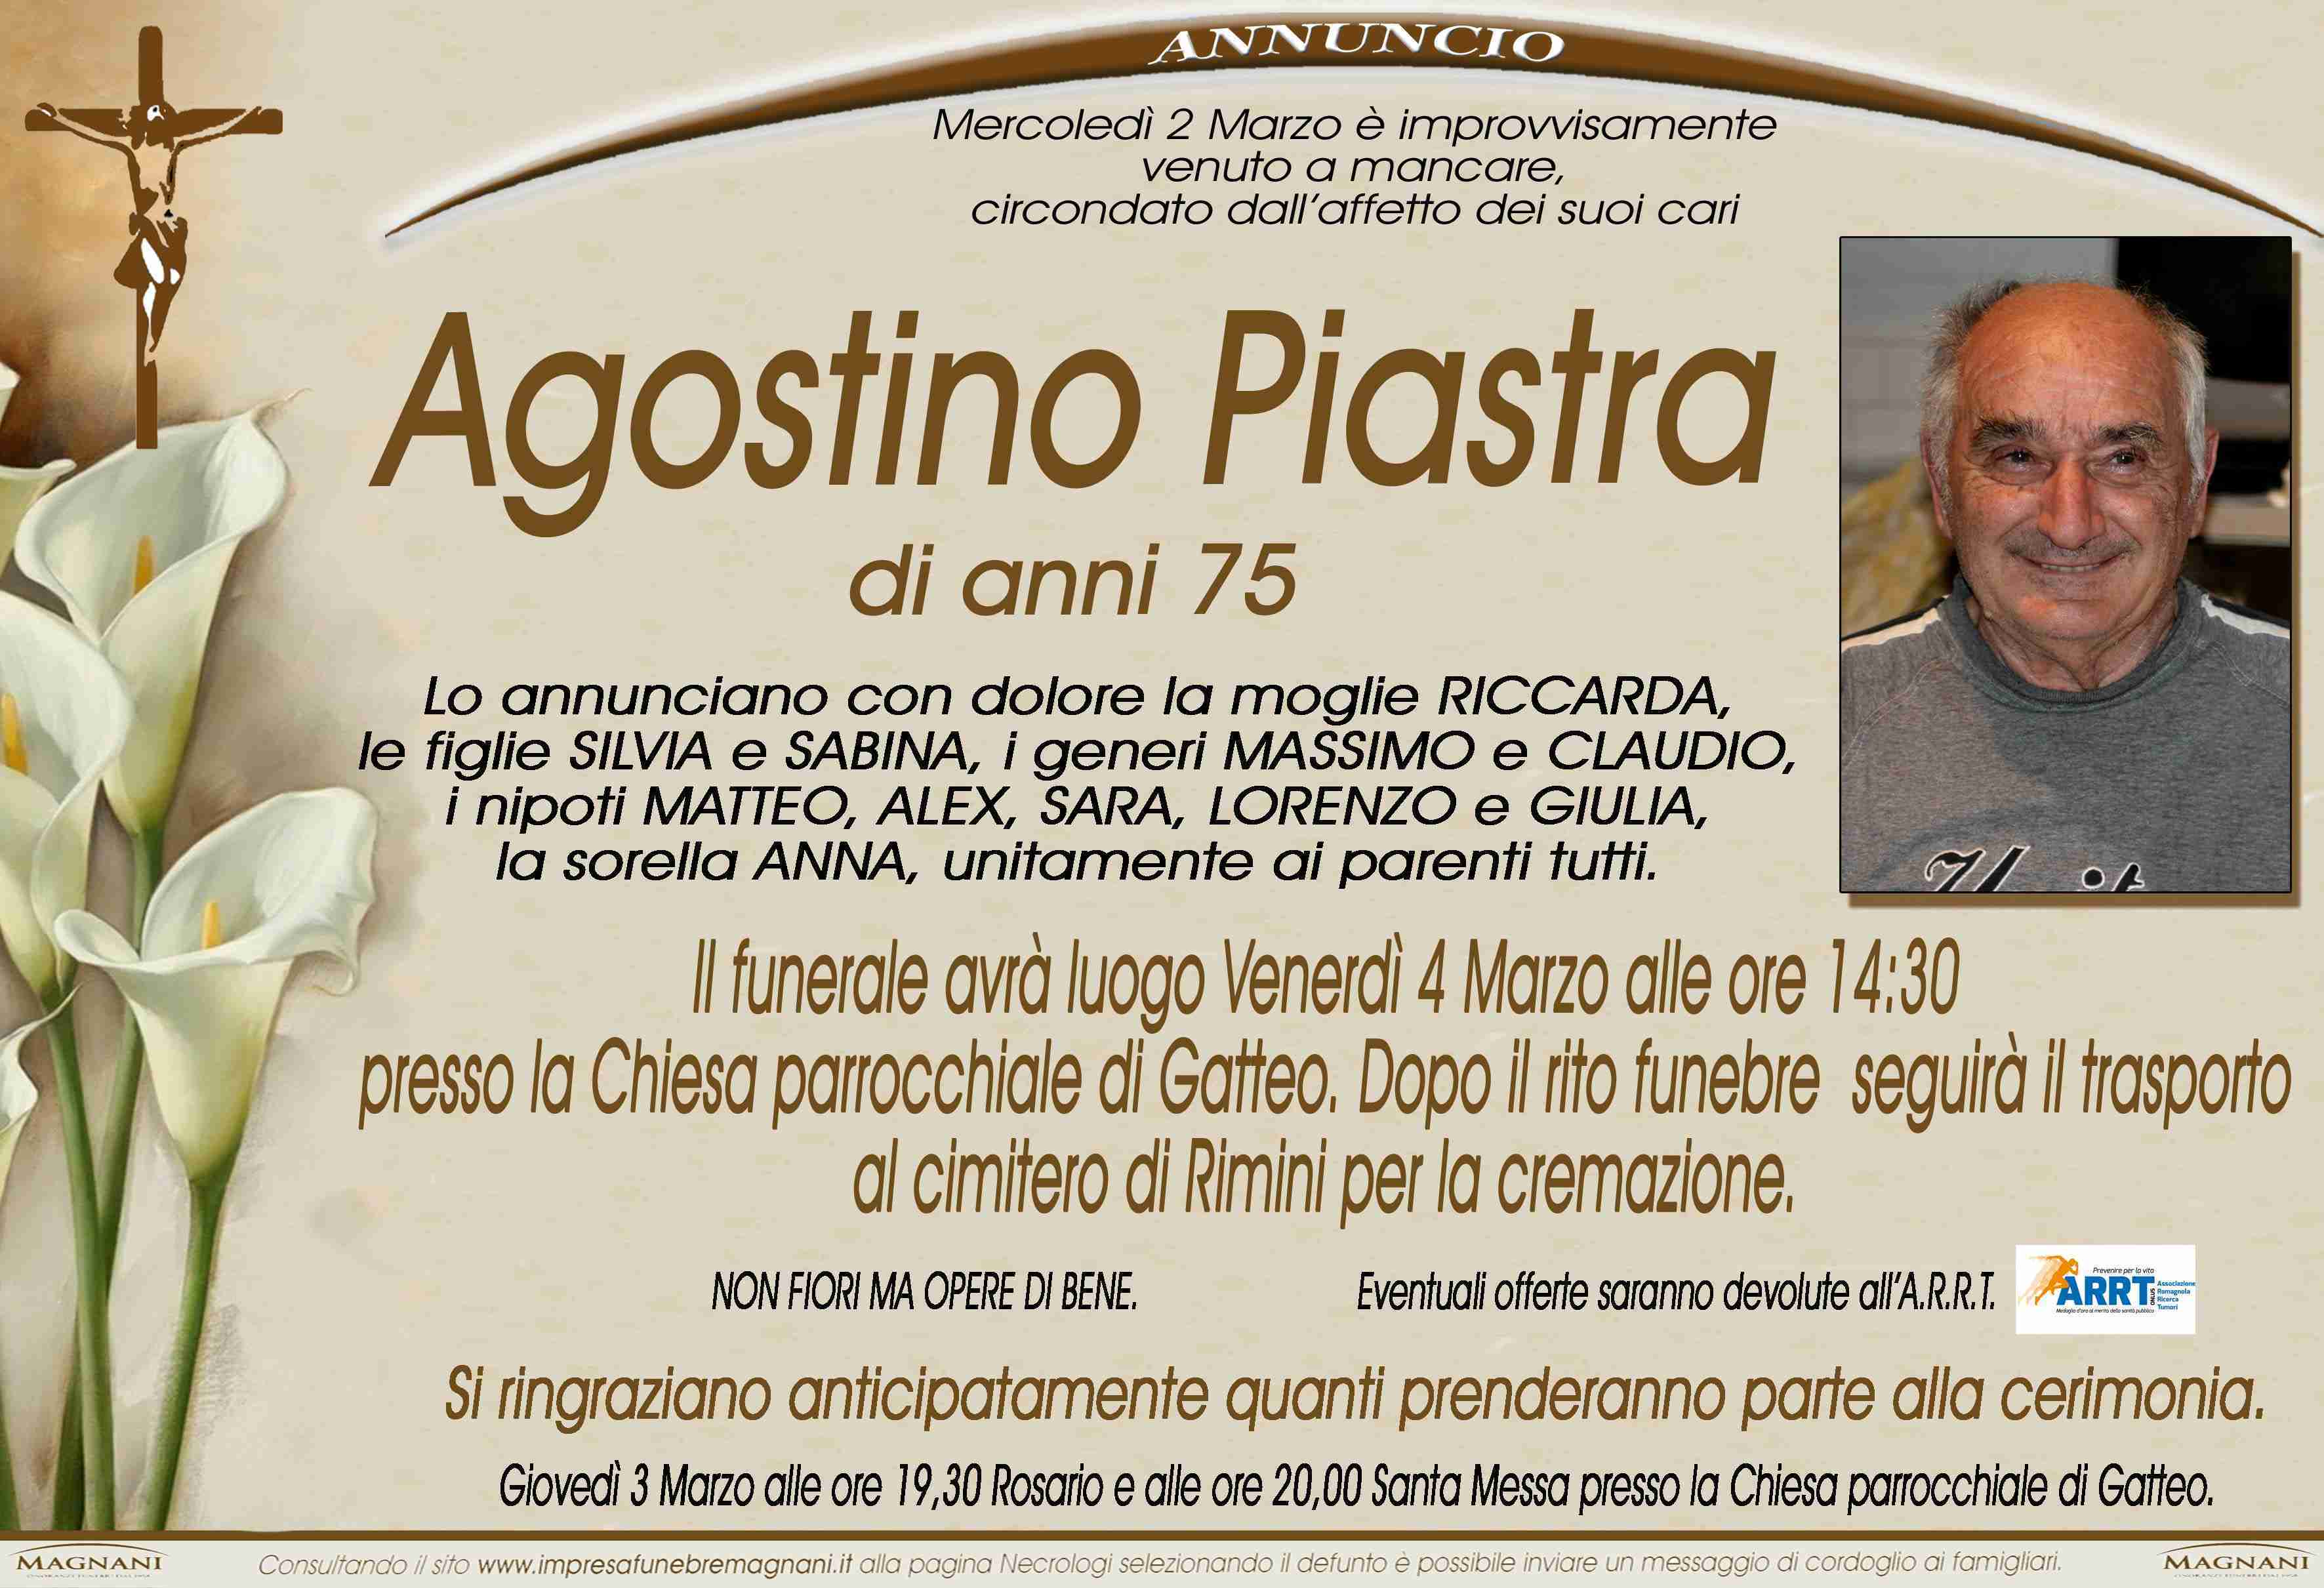 Agostino Piastra